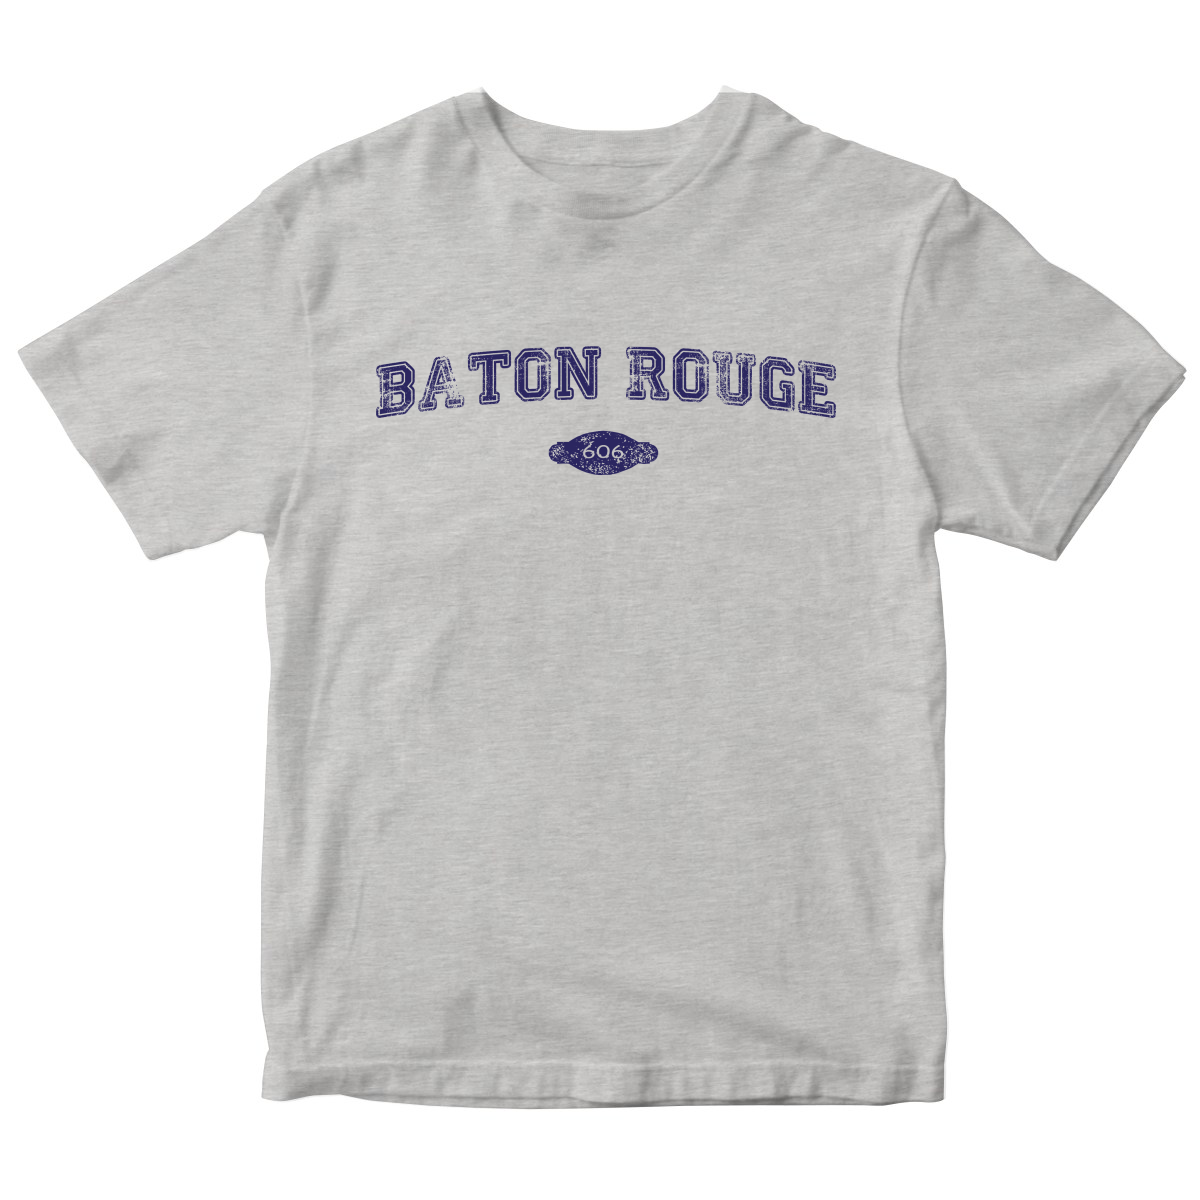 Baton Rouge 1699 Represent Toddler T-shirt | Gray